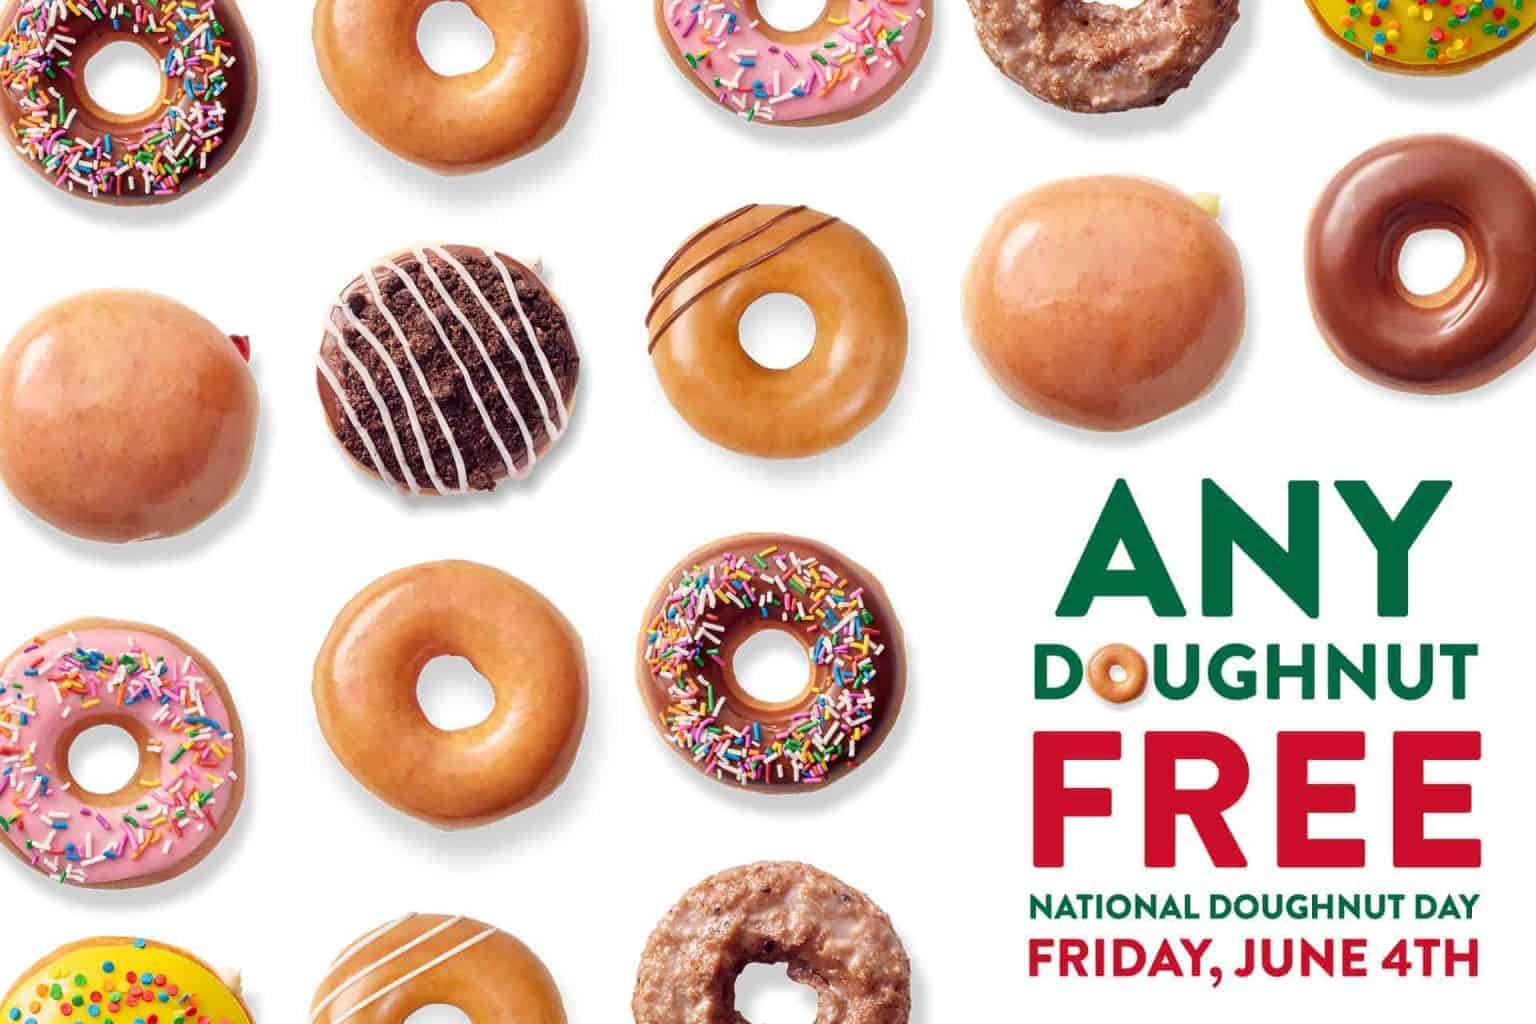 Get two free donuts & 1 dozen at Krispy Kreme on National Donut Day